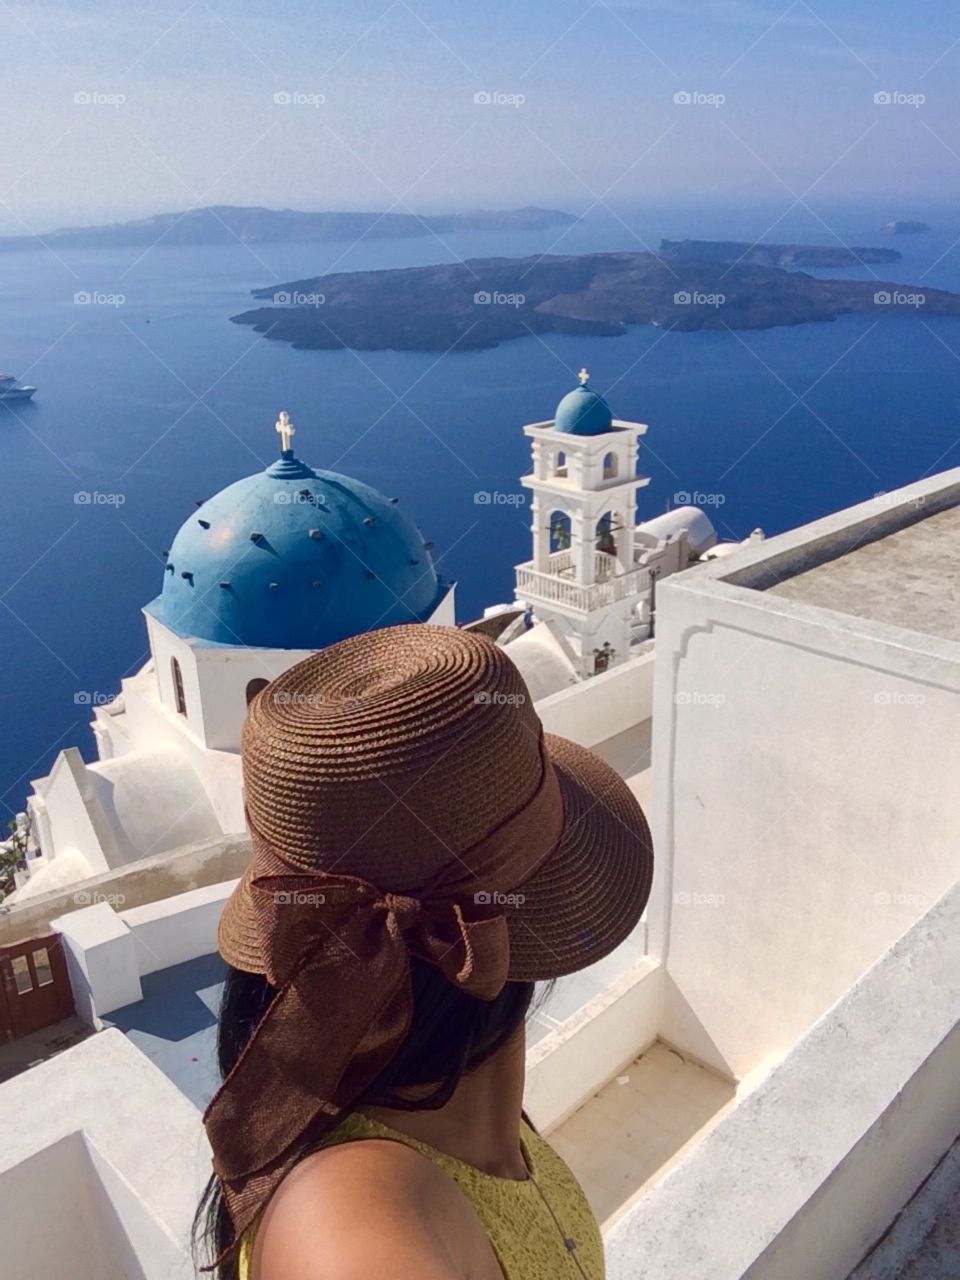 Santorini lover. Selfie with famous landmark of Santorini, Blue dome of church, summertime, Greece, Mediterranean sea, Europe 